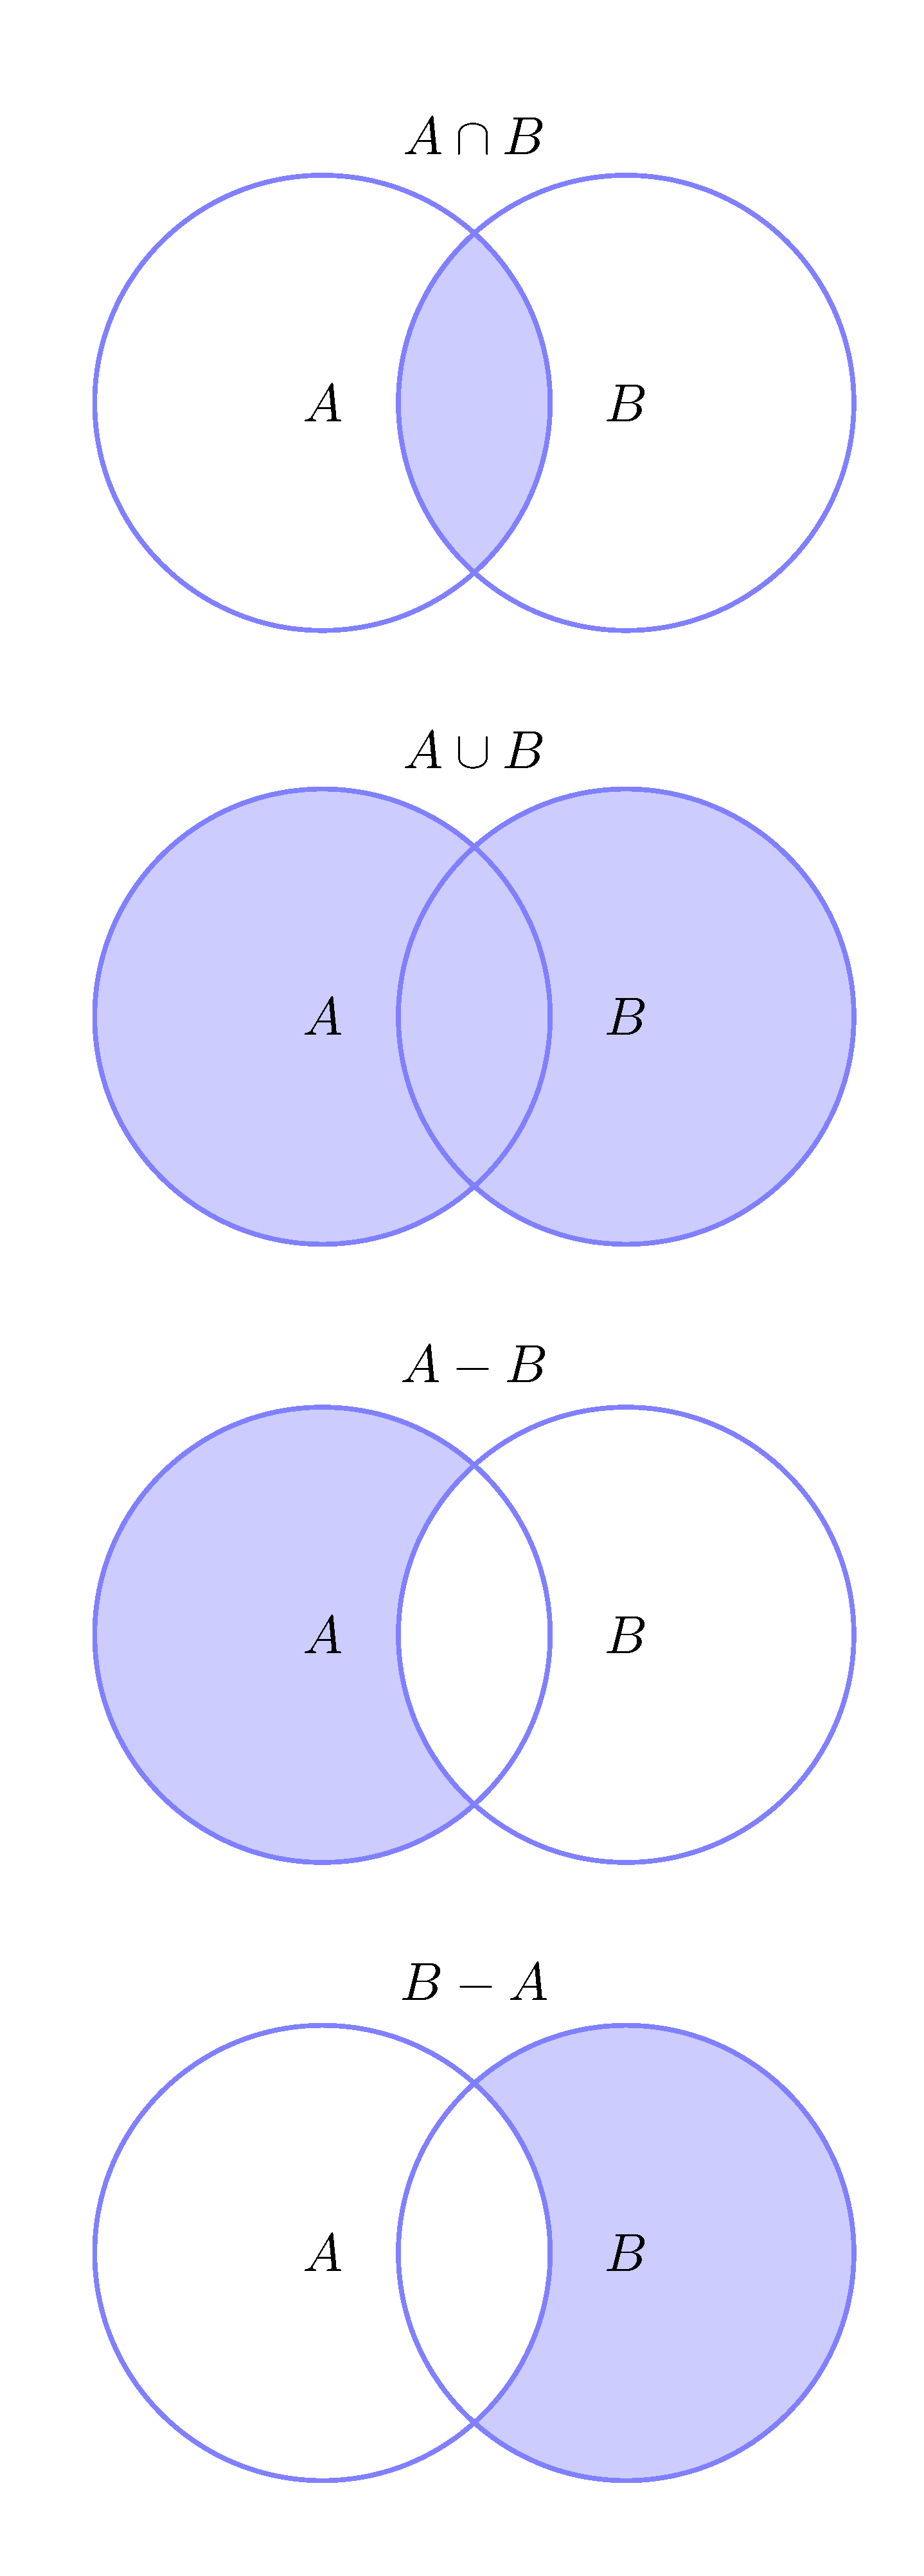 Set operations intersect(A,B), union(A,B) and setdiff(A,B).